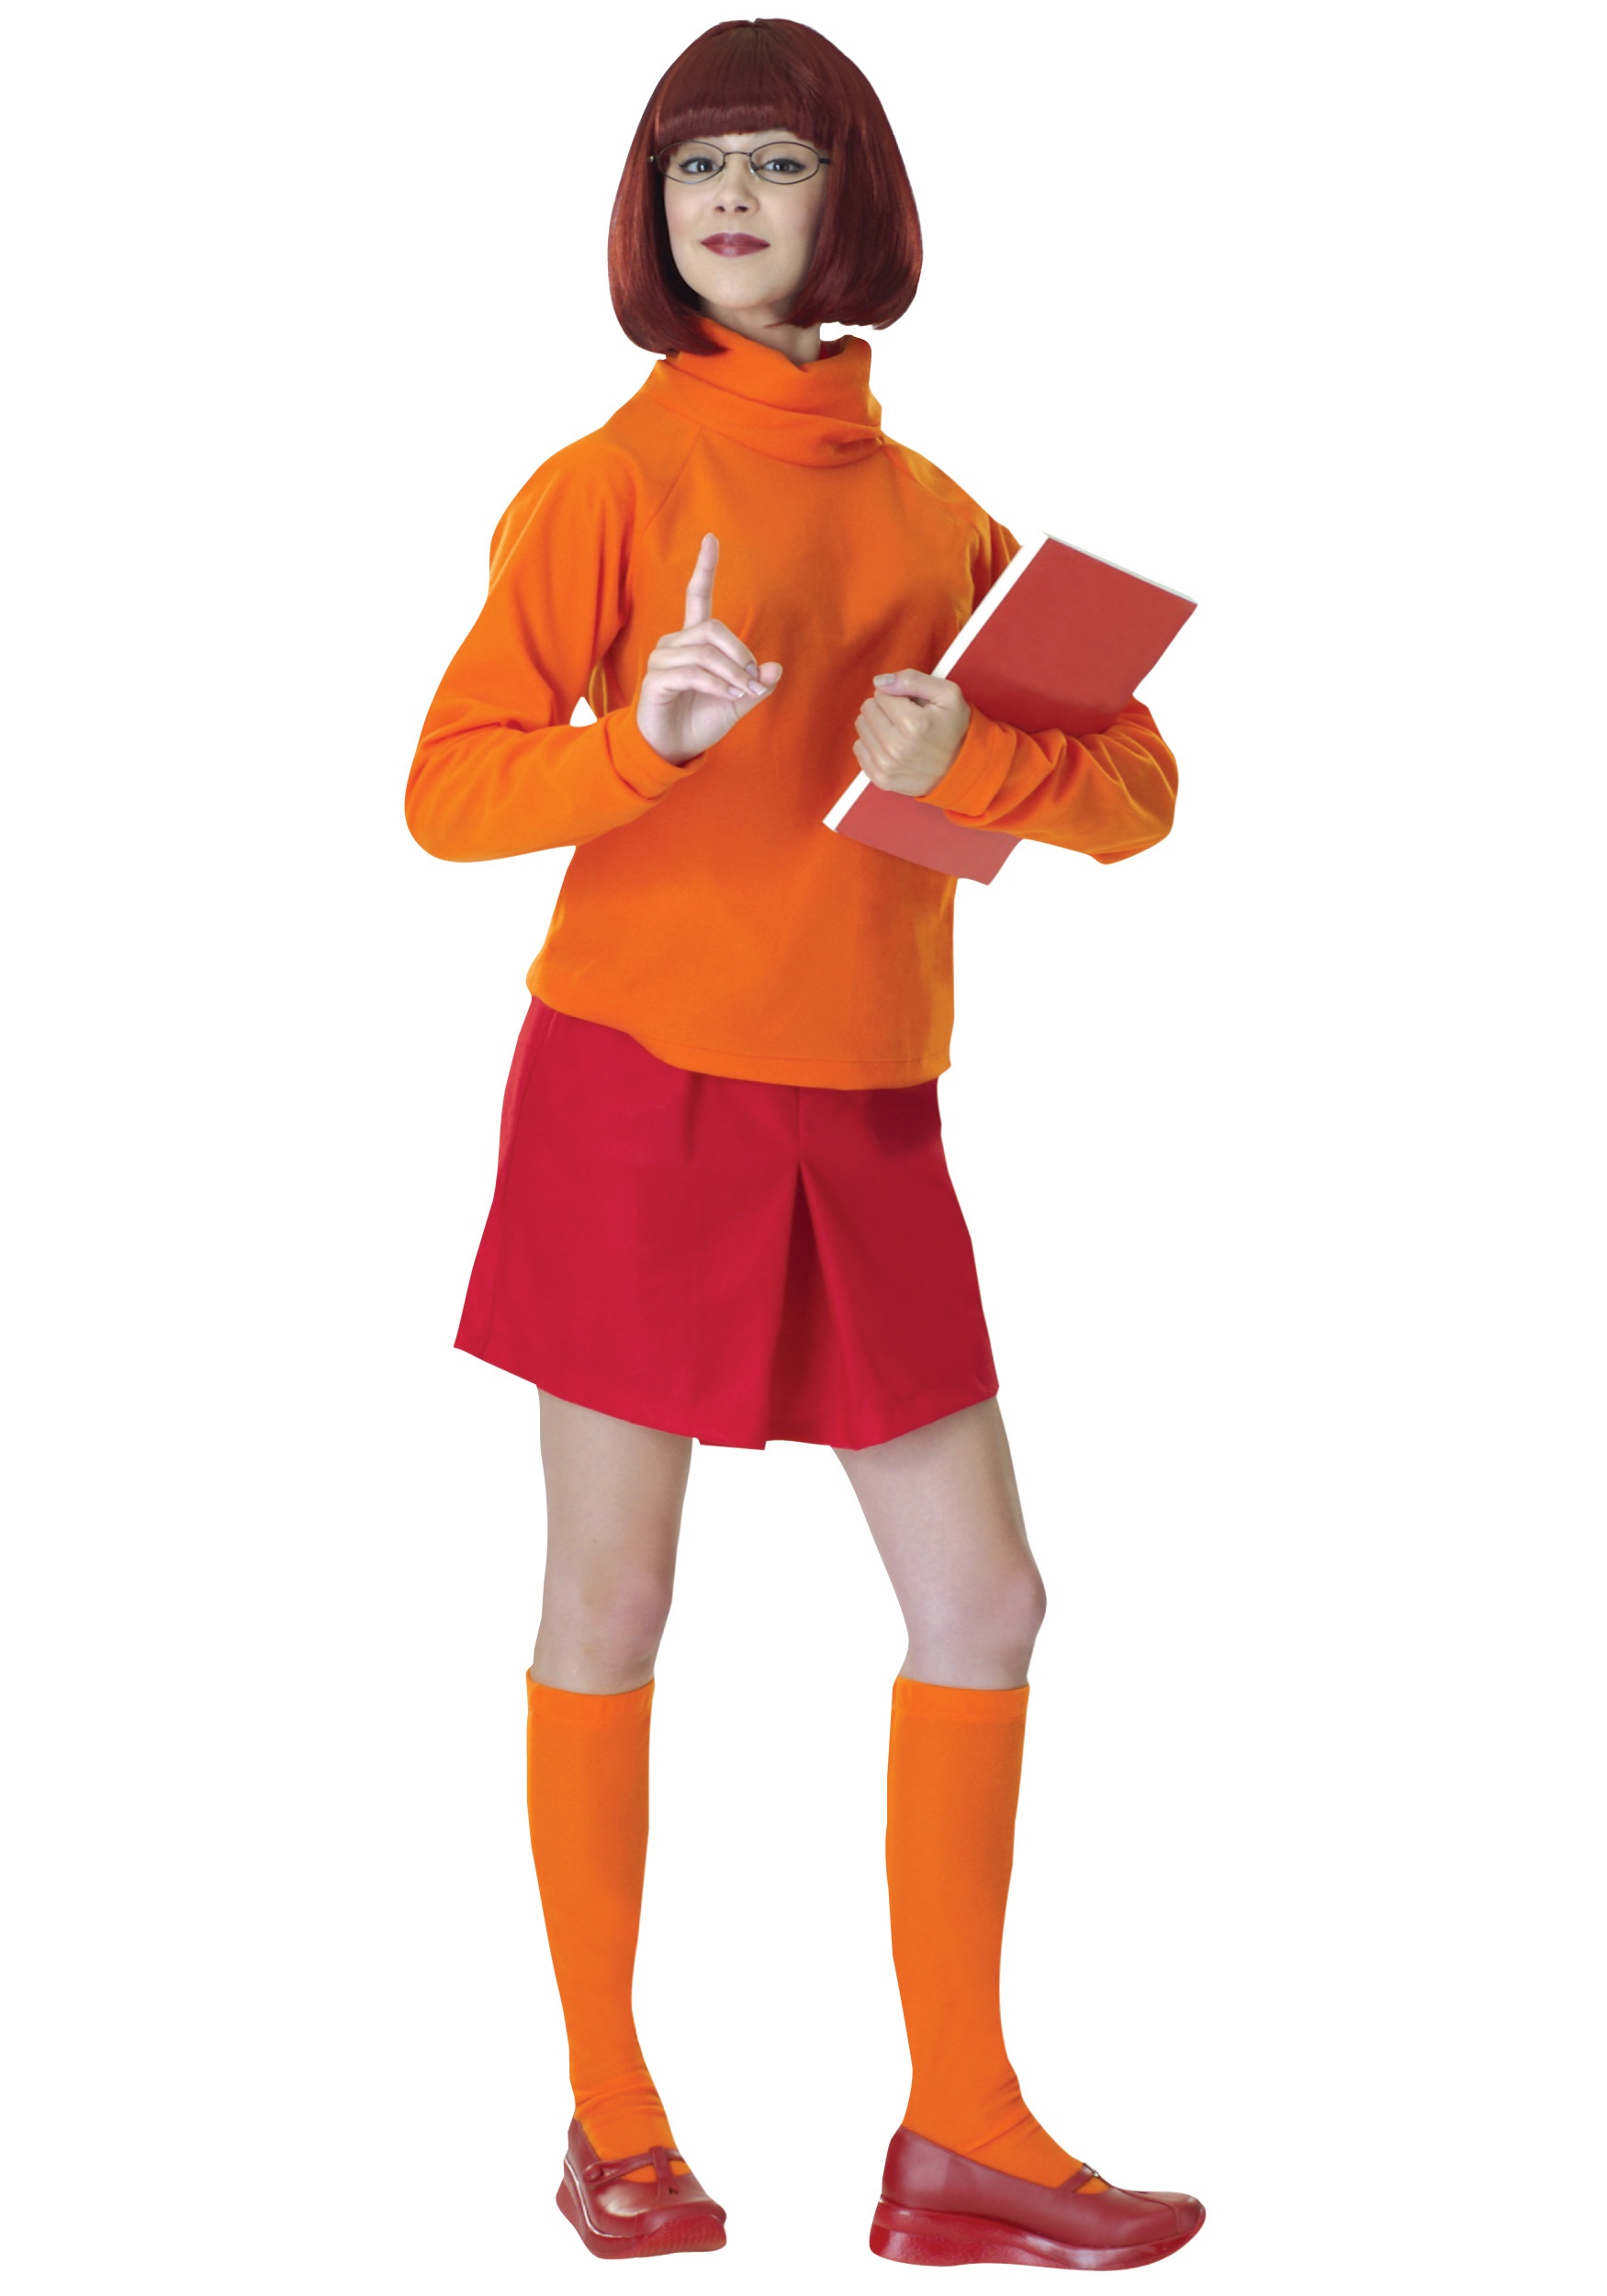 Adult Velma Costume W/ Wig - Adult Scooby Doo Costume